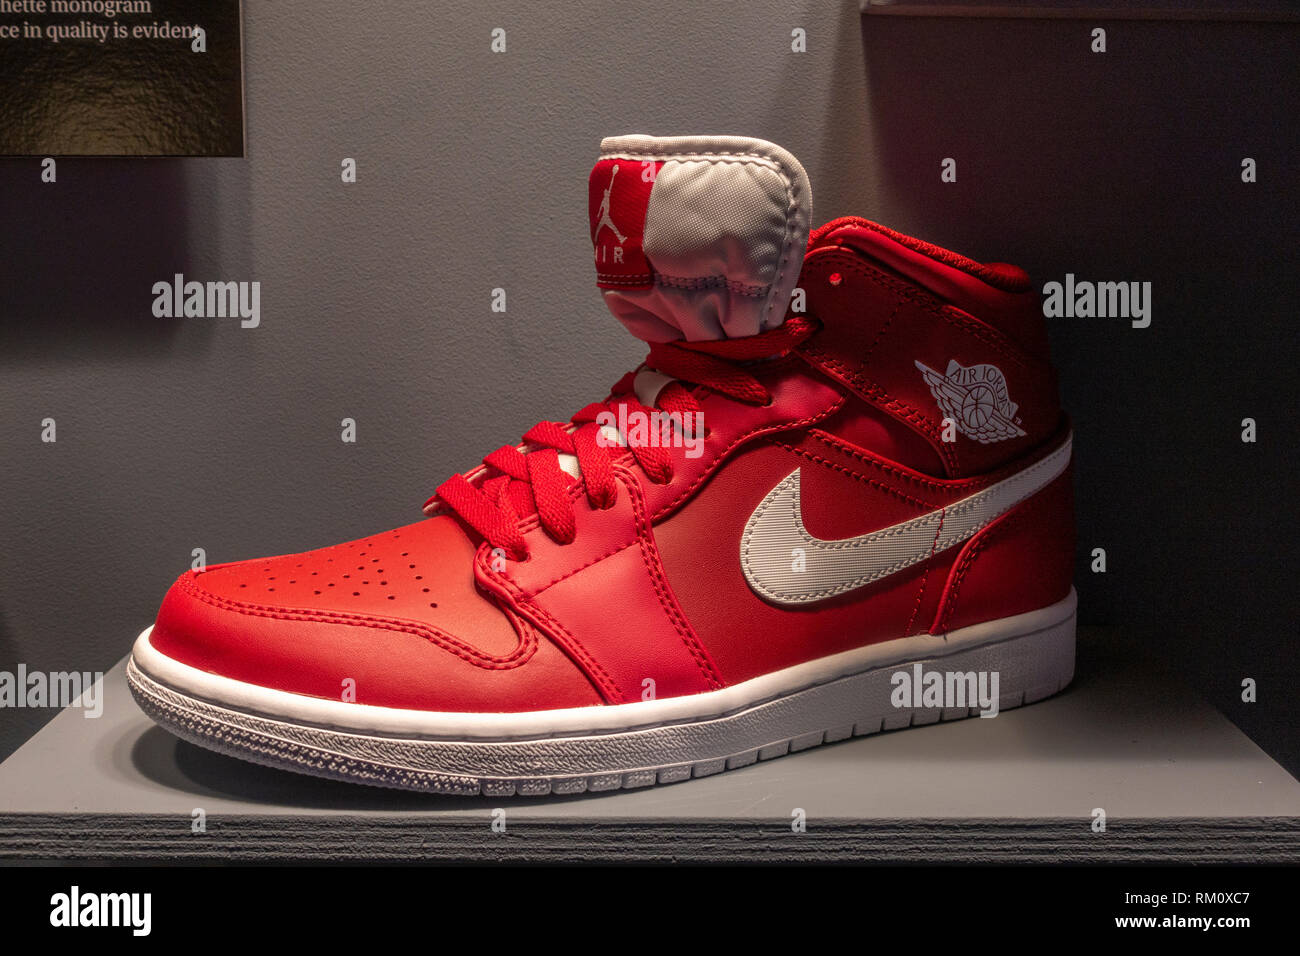 Nike air jordan immagini e fotografie stock ad alta risoluzione - Alamy